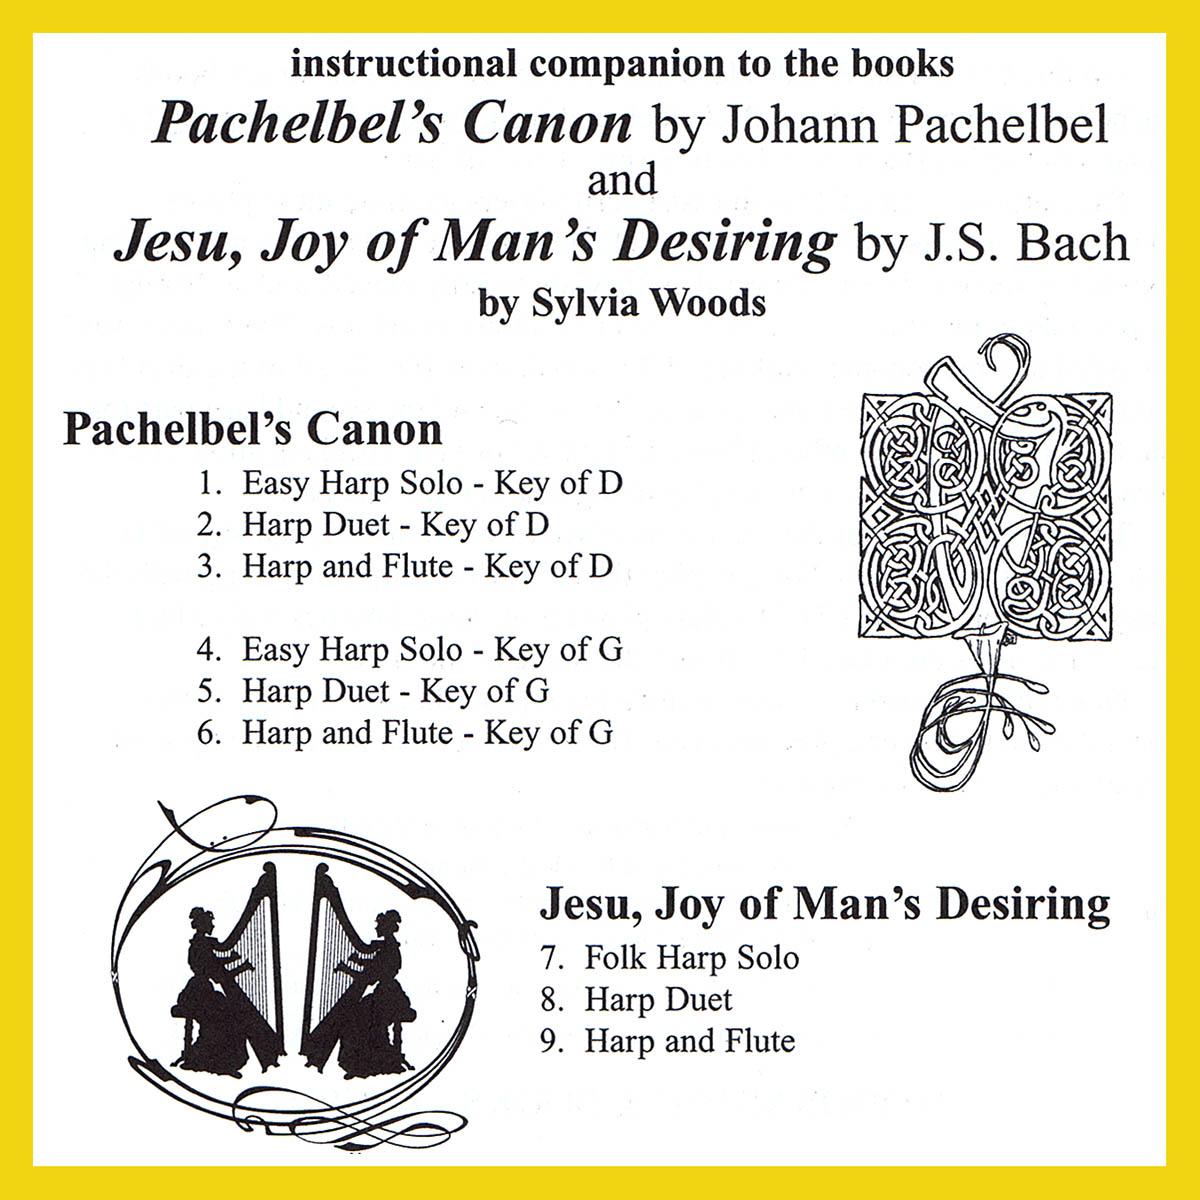 Pachelbel's Canon & Jesu, Joy of Man's Desiring - Companion CD to the Songbook